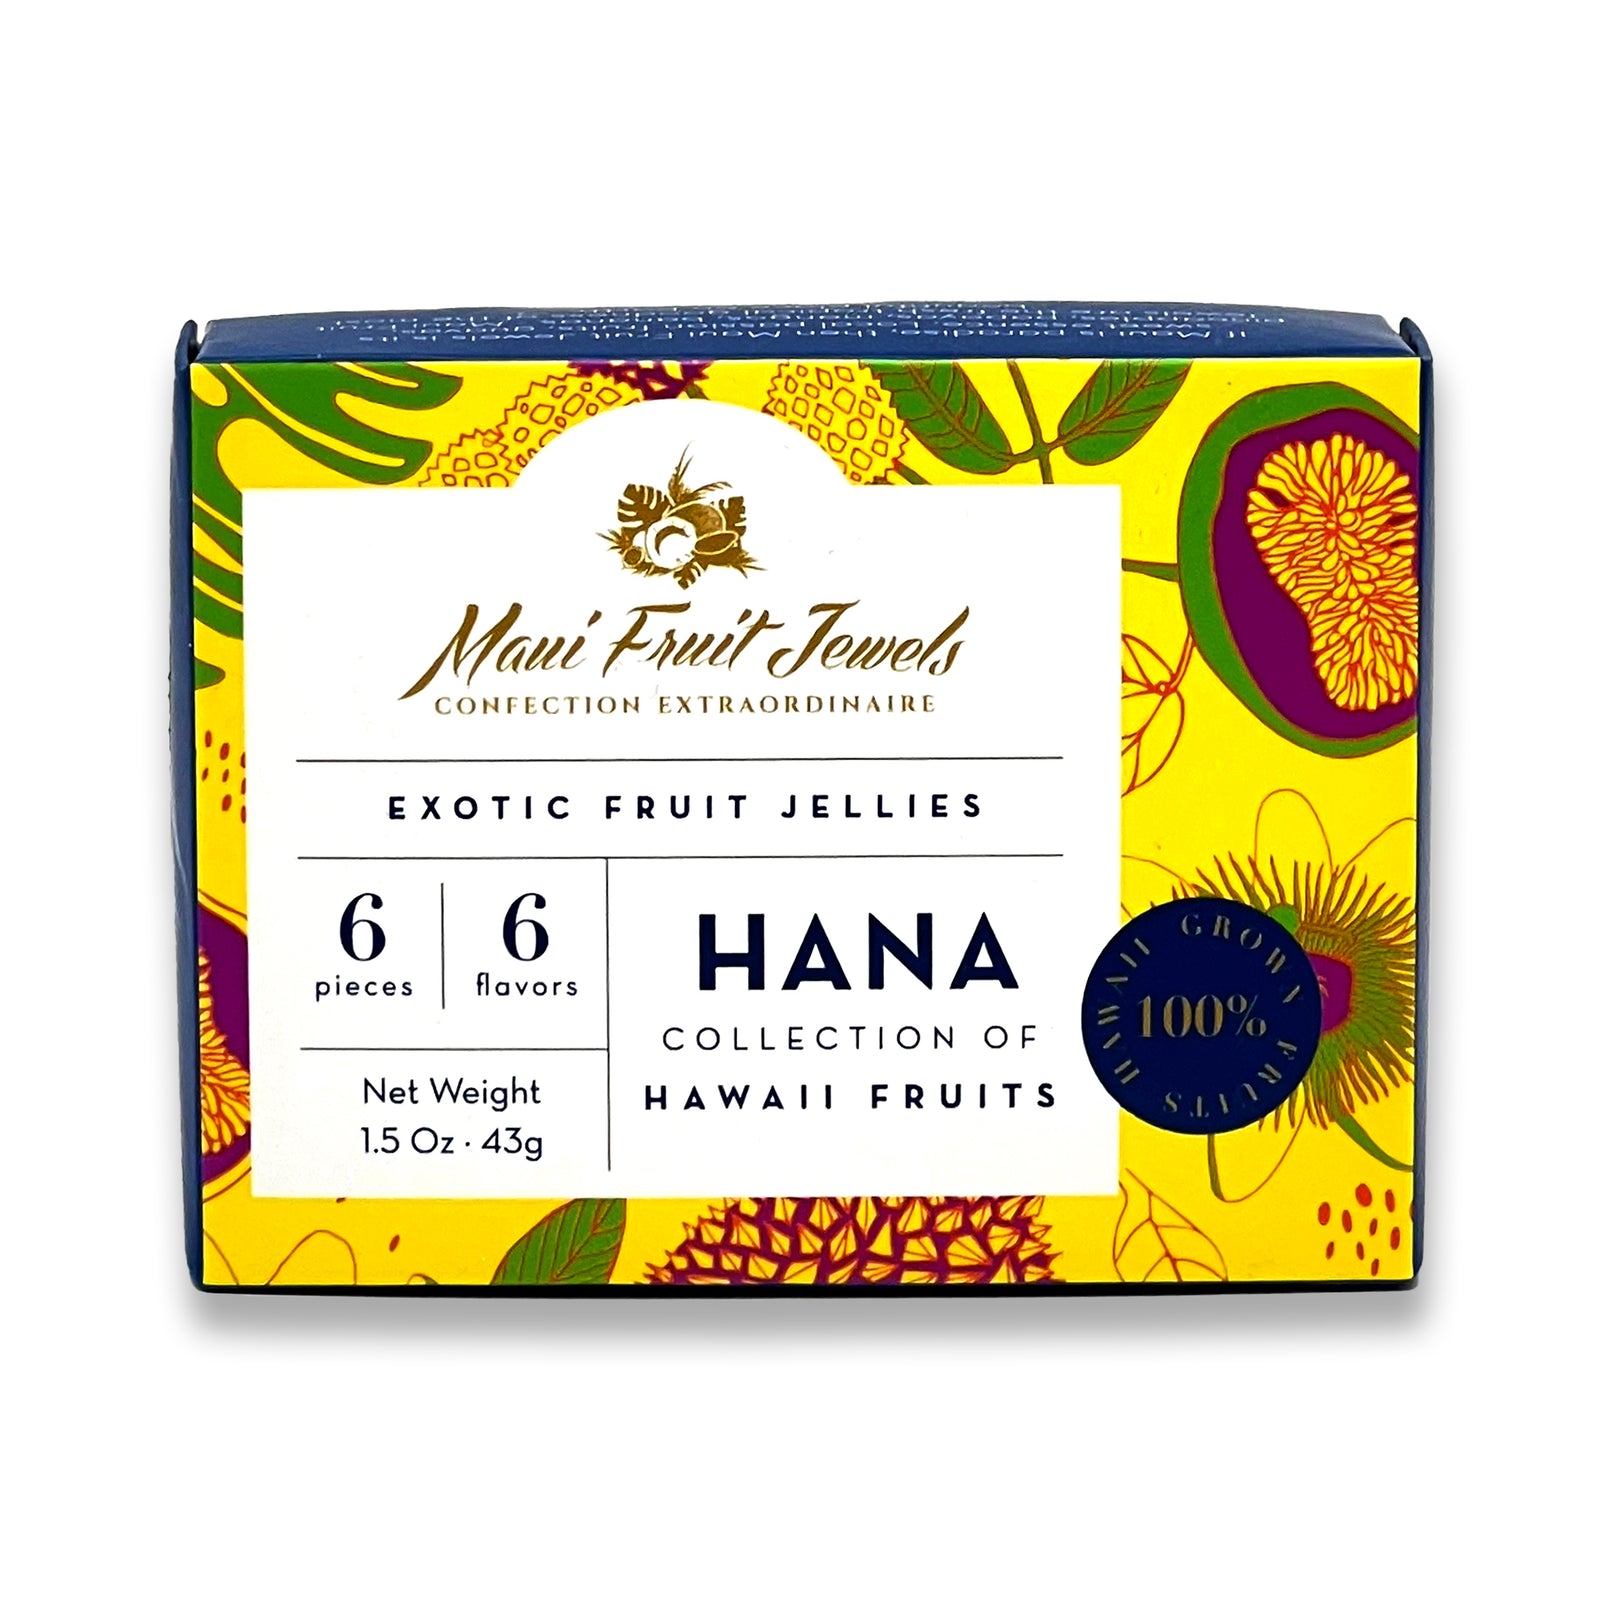 Pop-Up Mākeke - Maui Fruit Jewels - Exotic Fruit Jellies - Hana - Front View